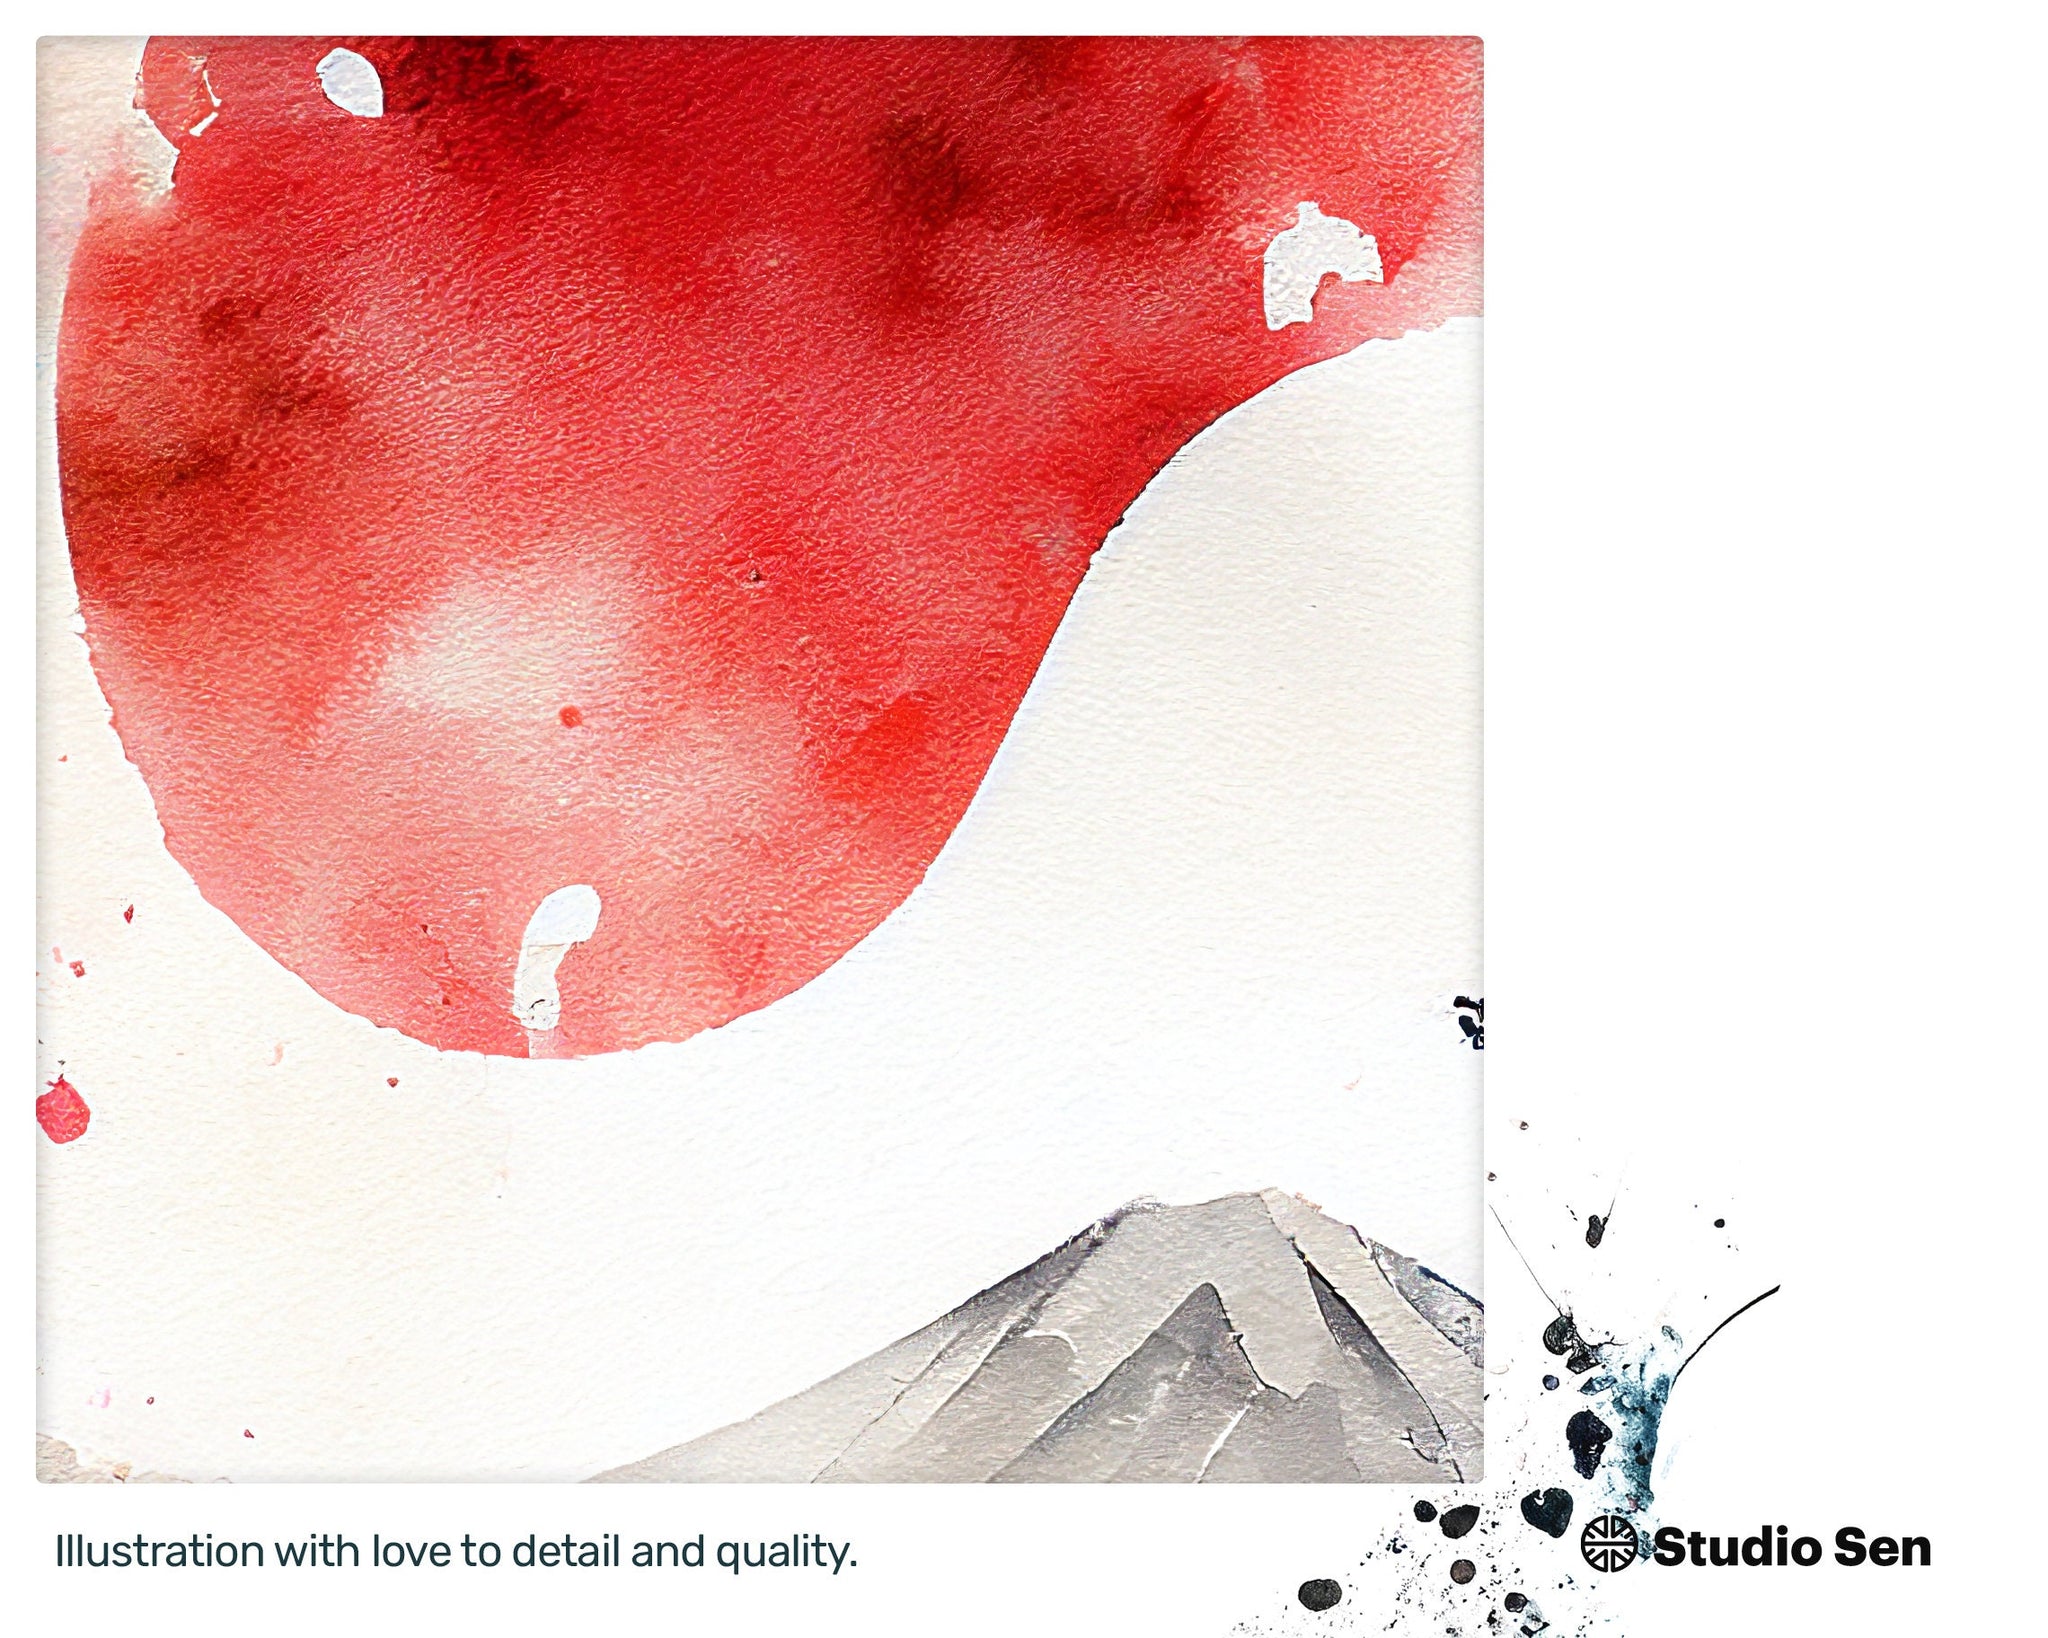 Illuminated Dancing Japanese flag, Dancing Youthful Canvas, Drawn Playful Zany Quirky Quaint Mug Print